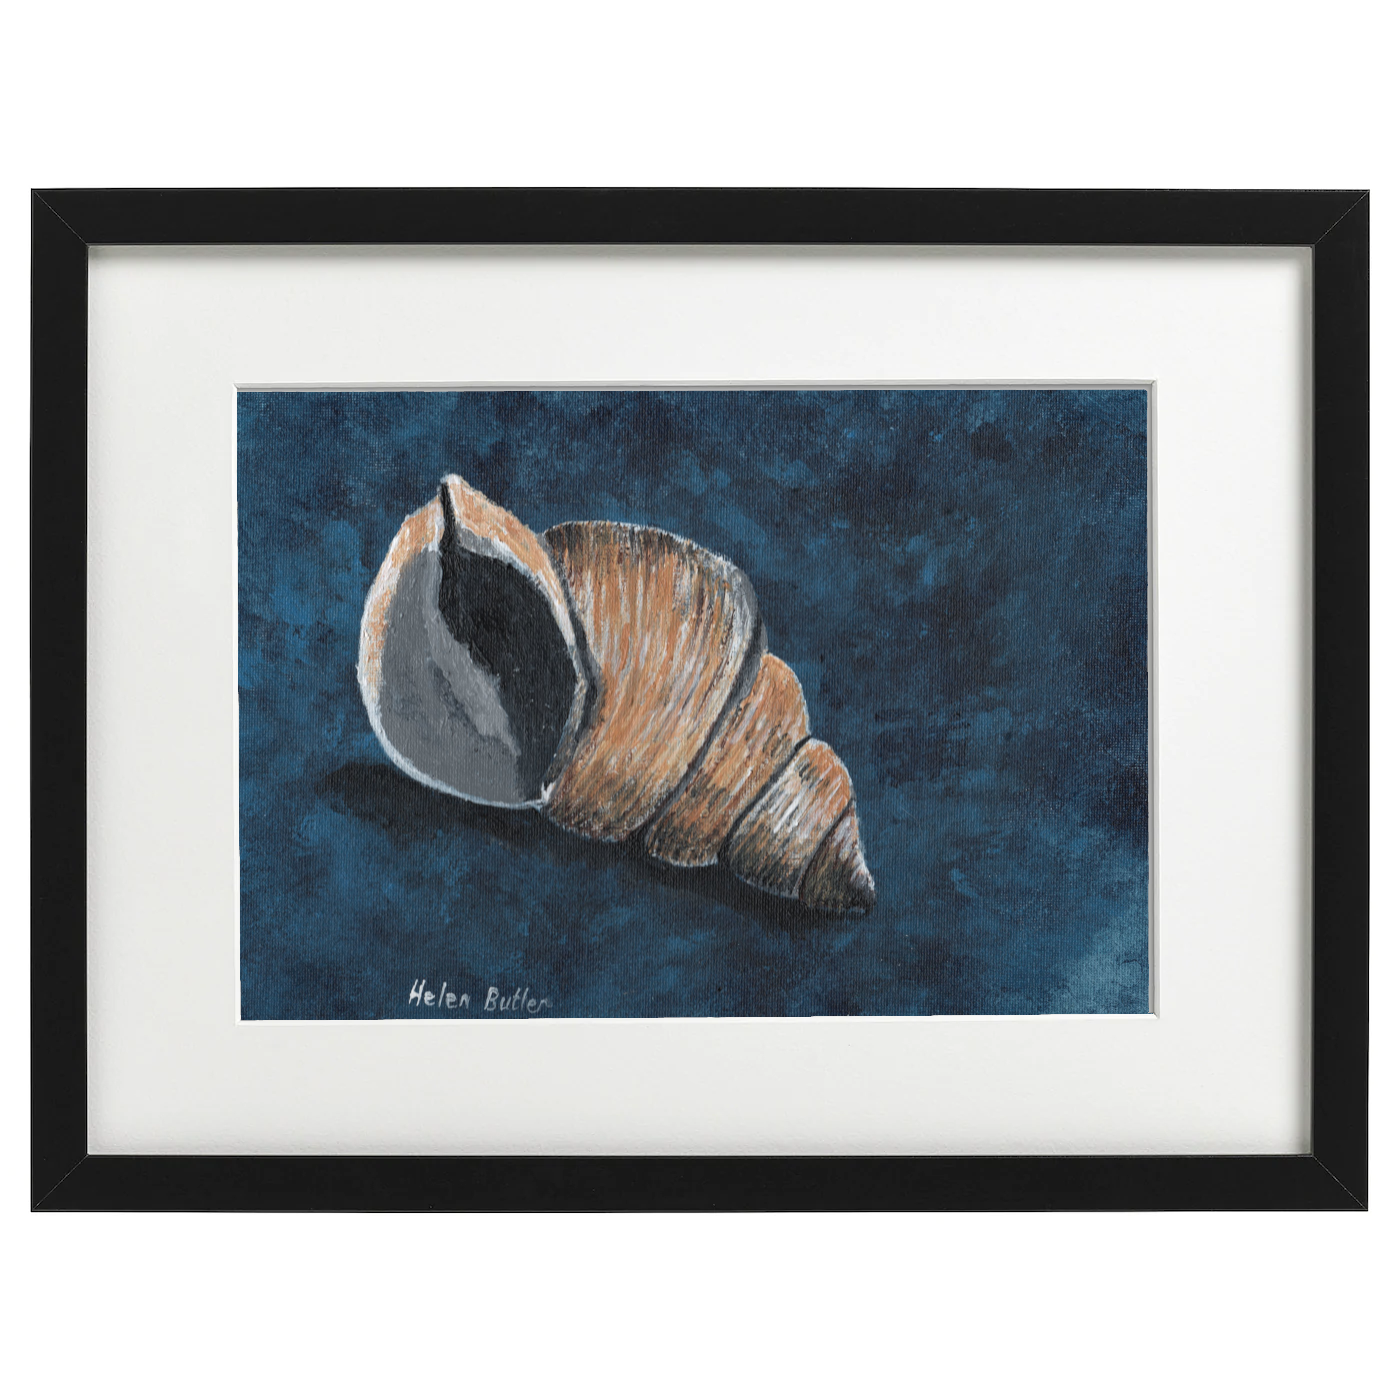 Whelk shell - Acrylic on A4 canvas board